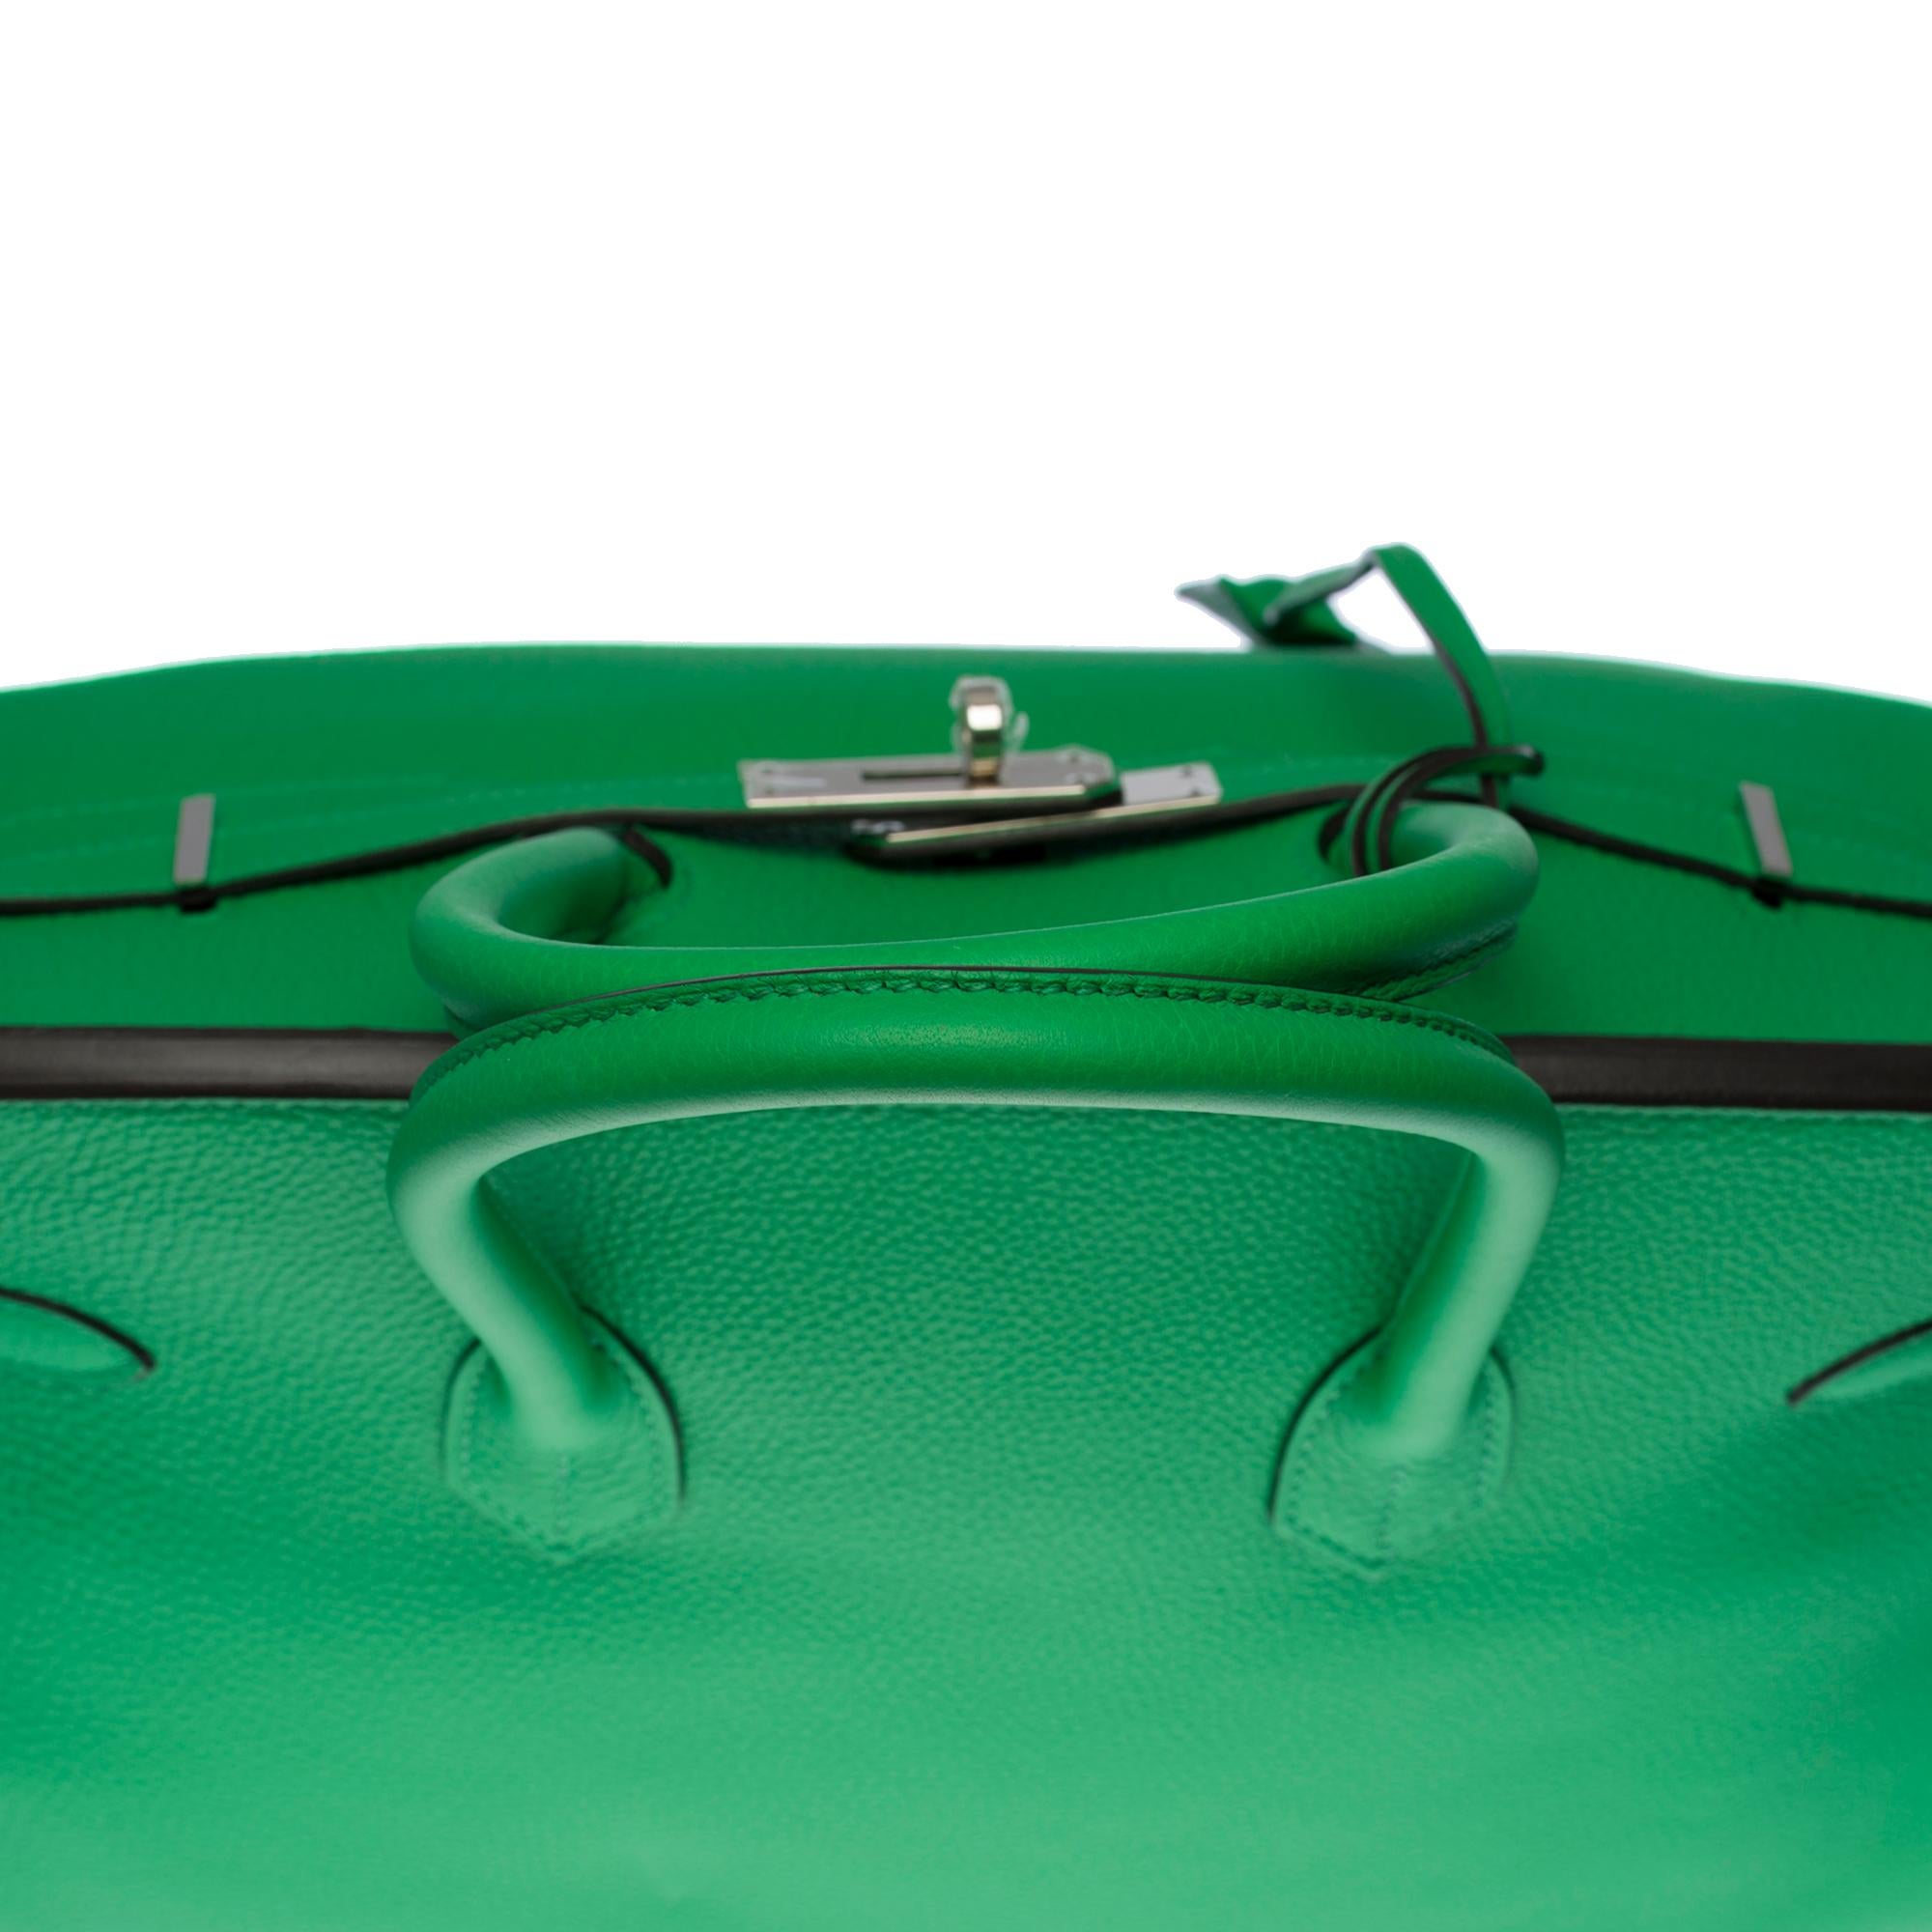 New Condition Hermès Birkin 35 handbag in Vert Bamboo Togo leather, SHW 3